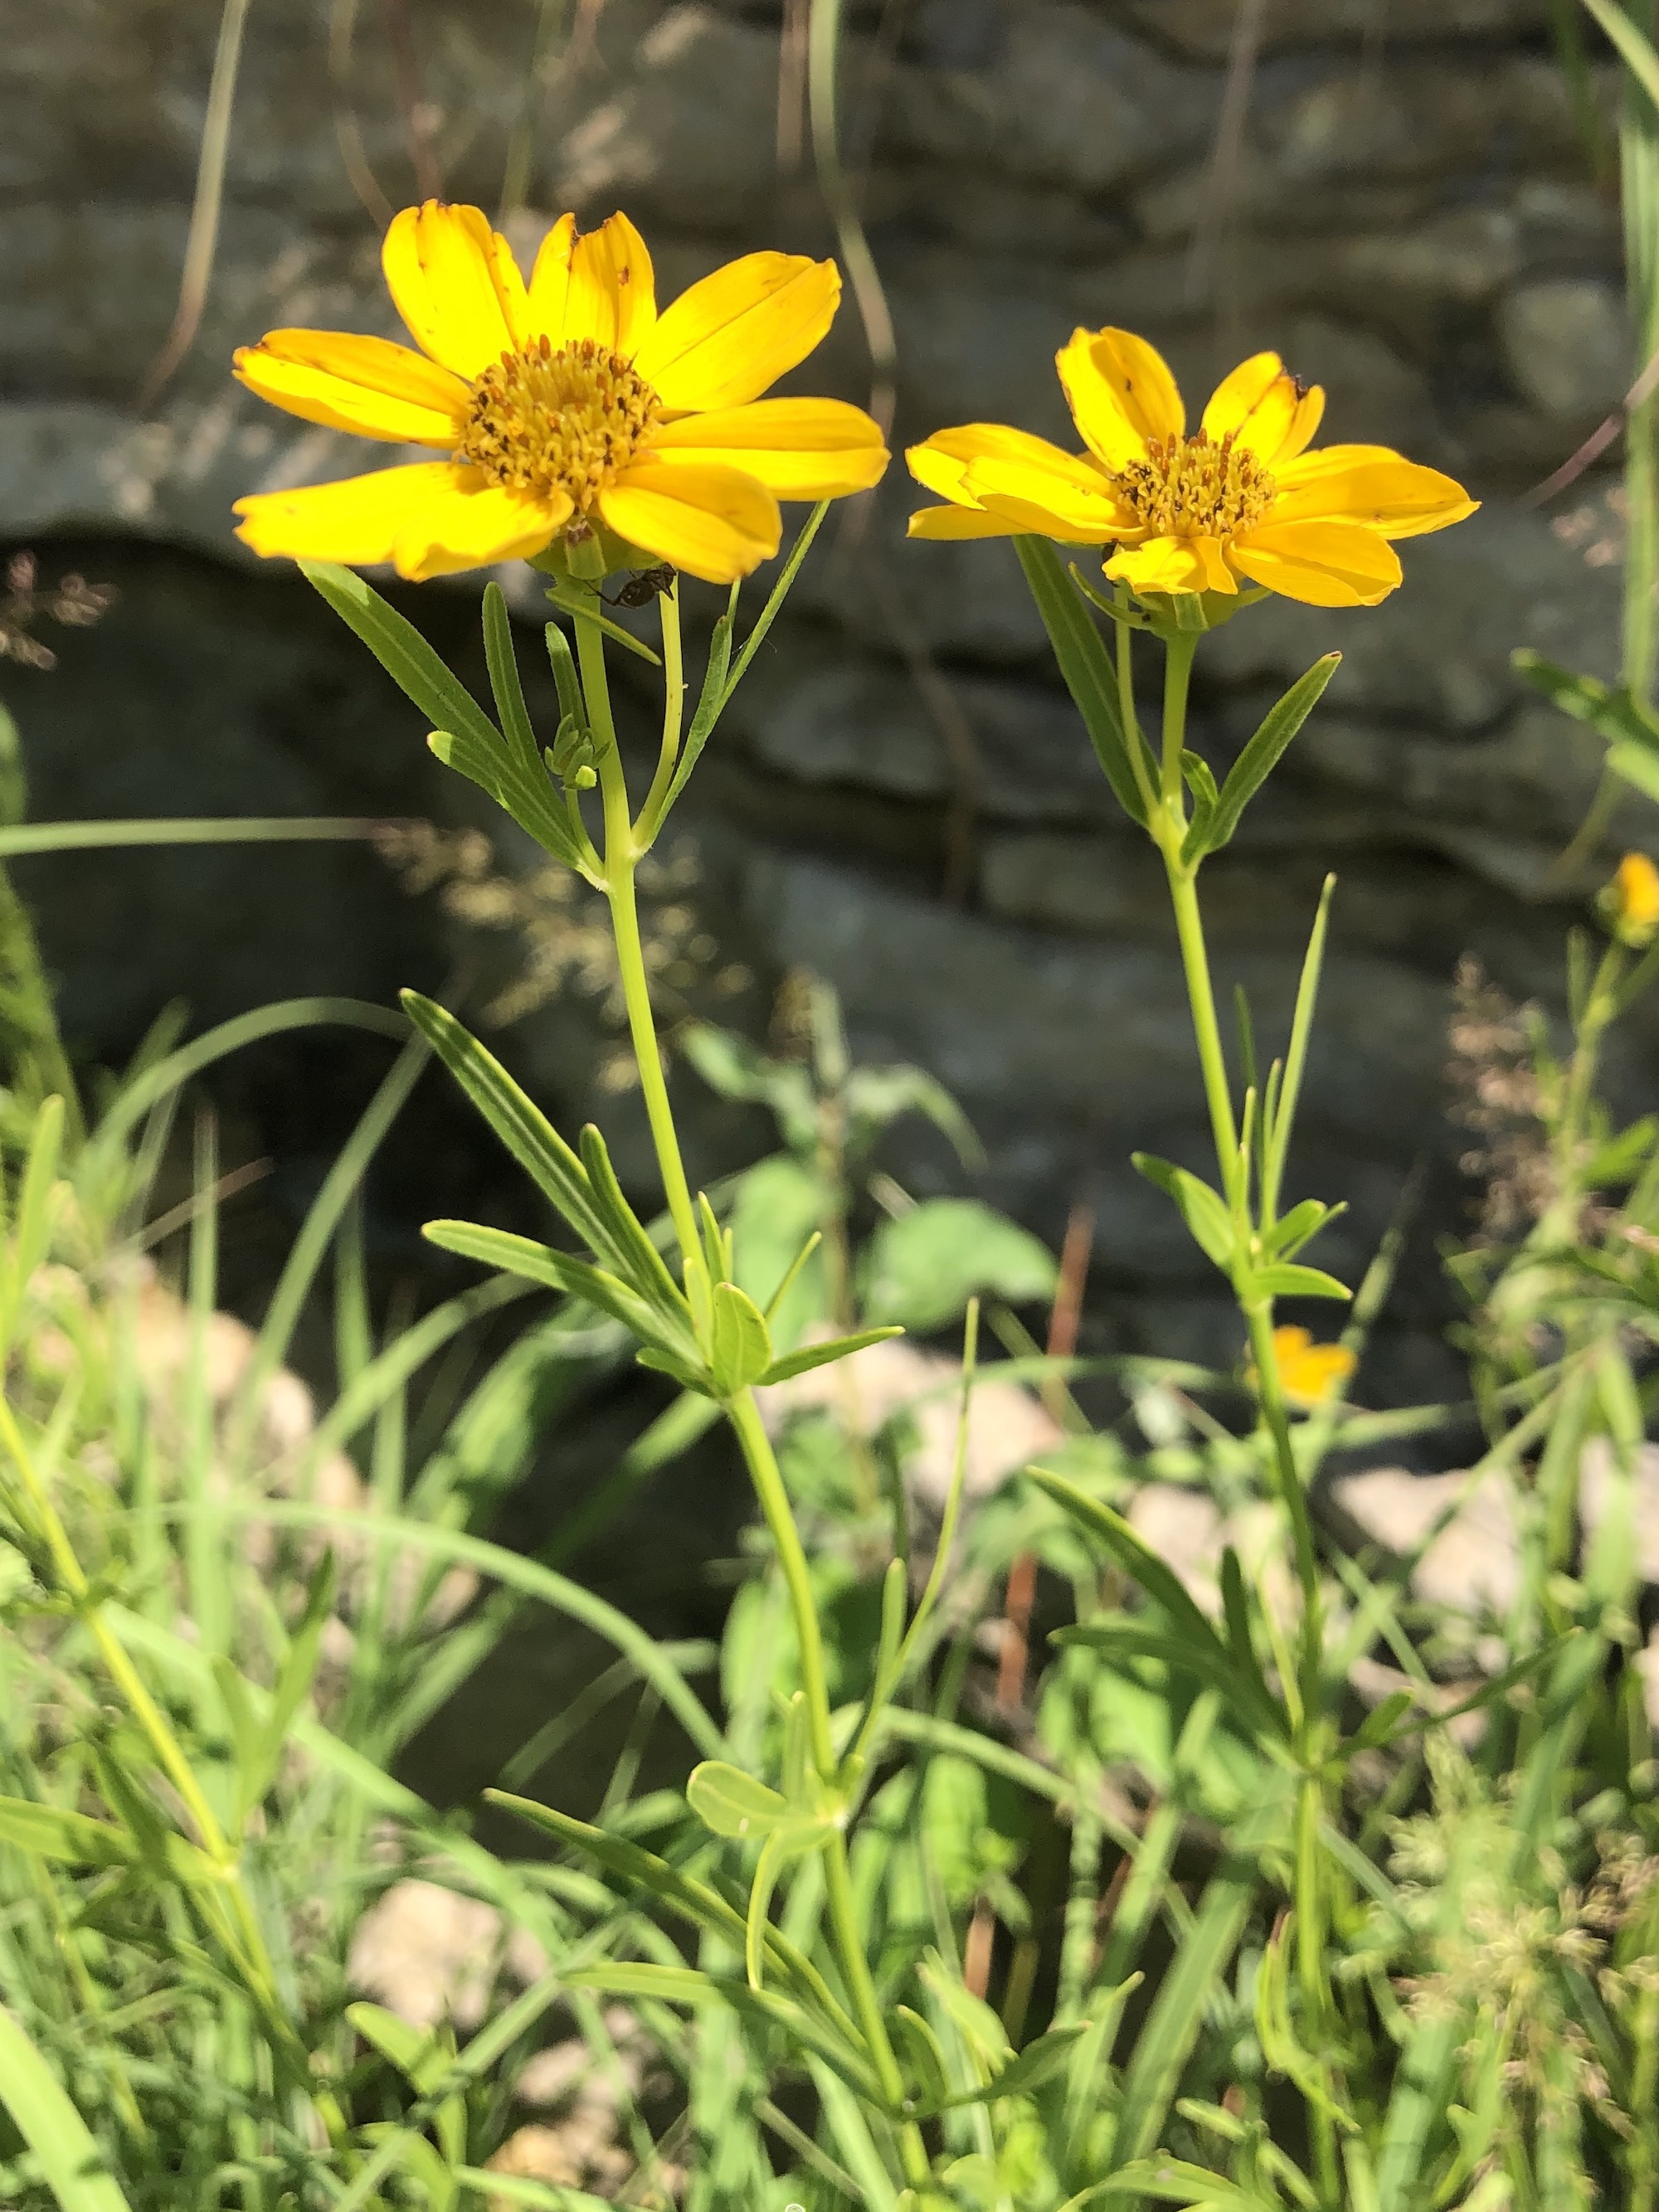 Prairie Coreopsis in UW Arboretum near Visitors Center in Madison, Wisconsin on June 18, 2021.